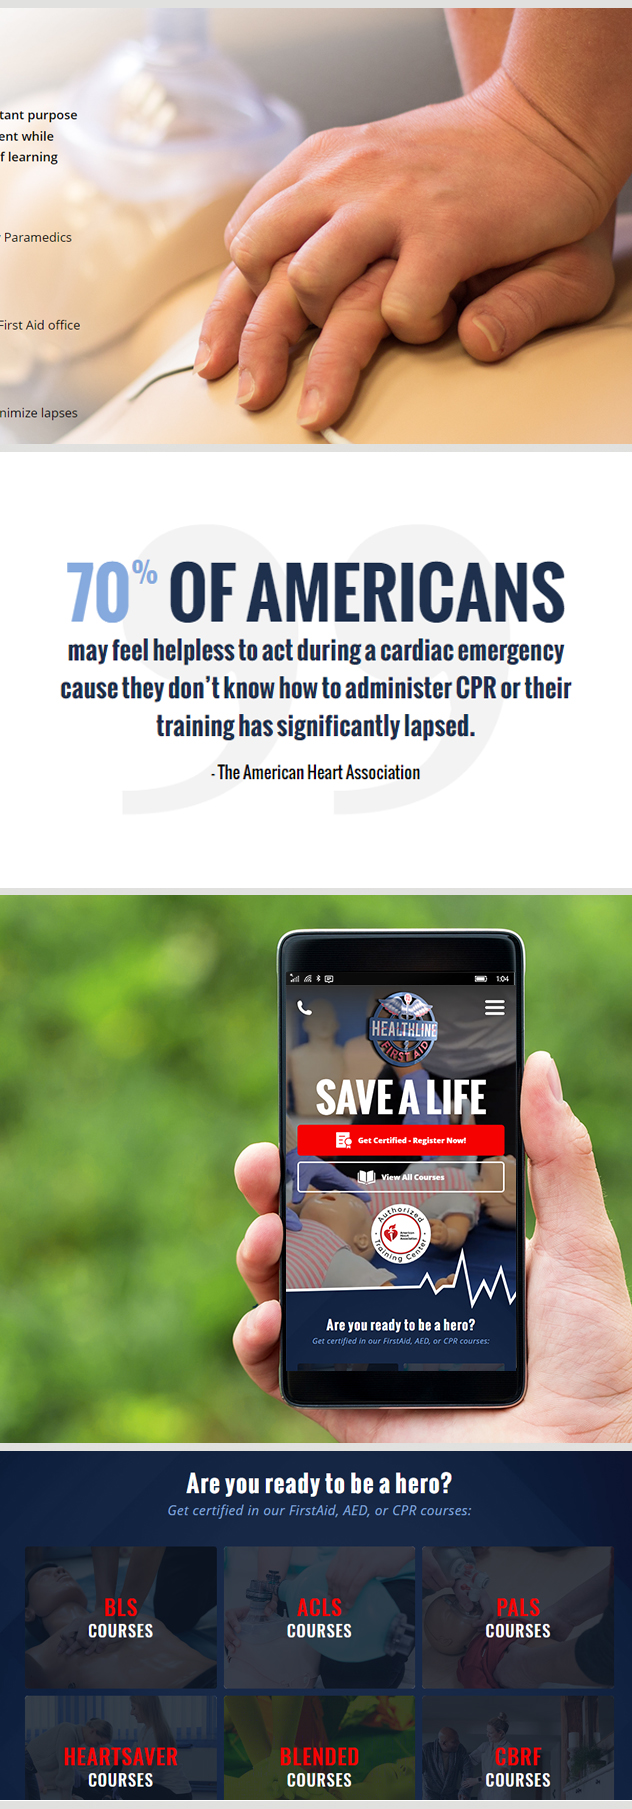 Milwaukee web marketing for Healthline First Aid